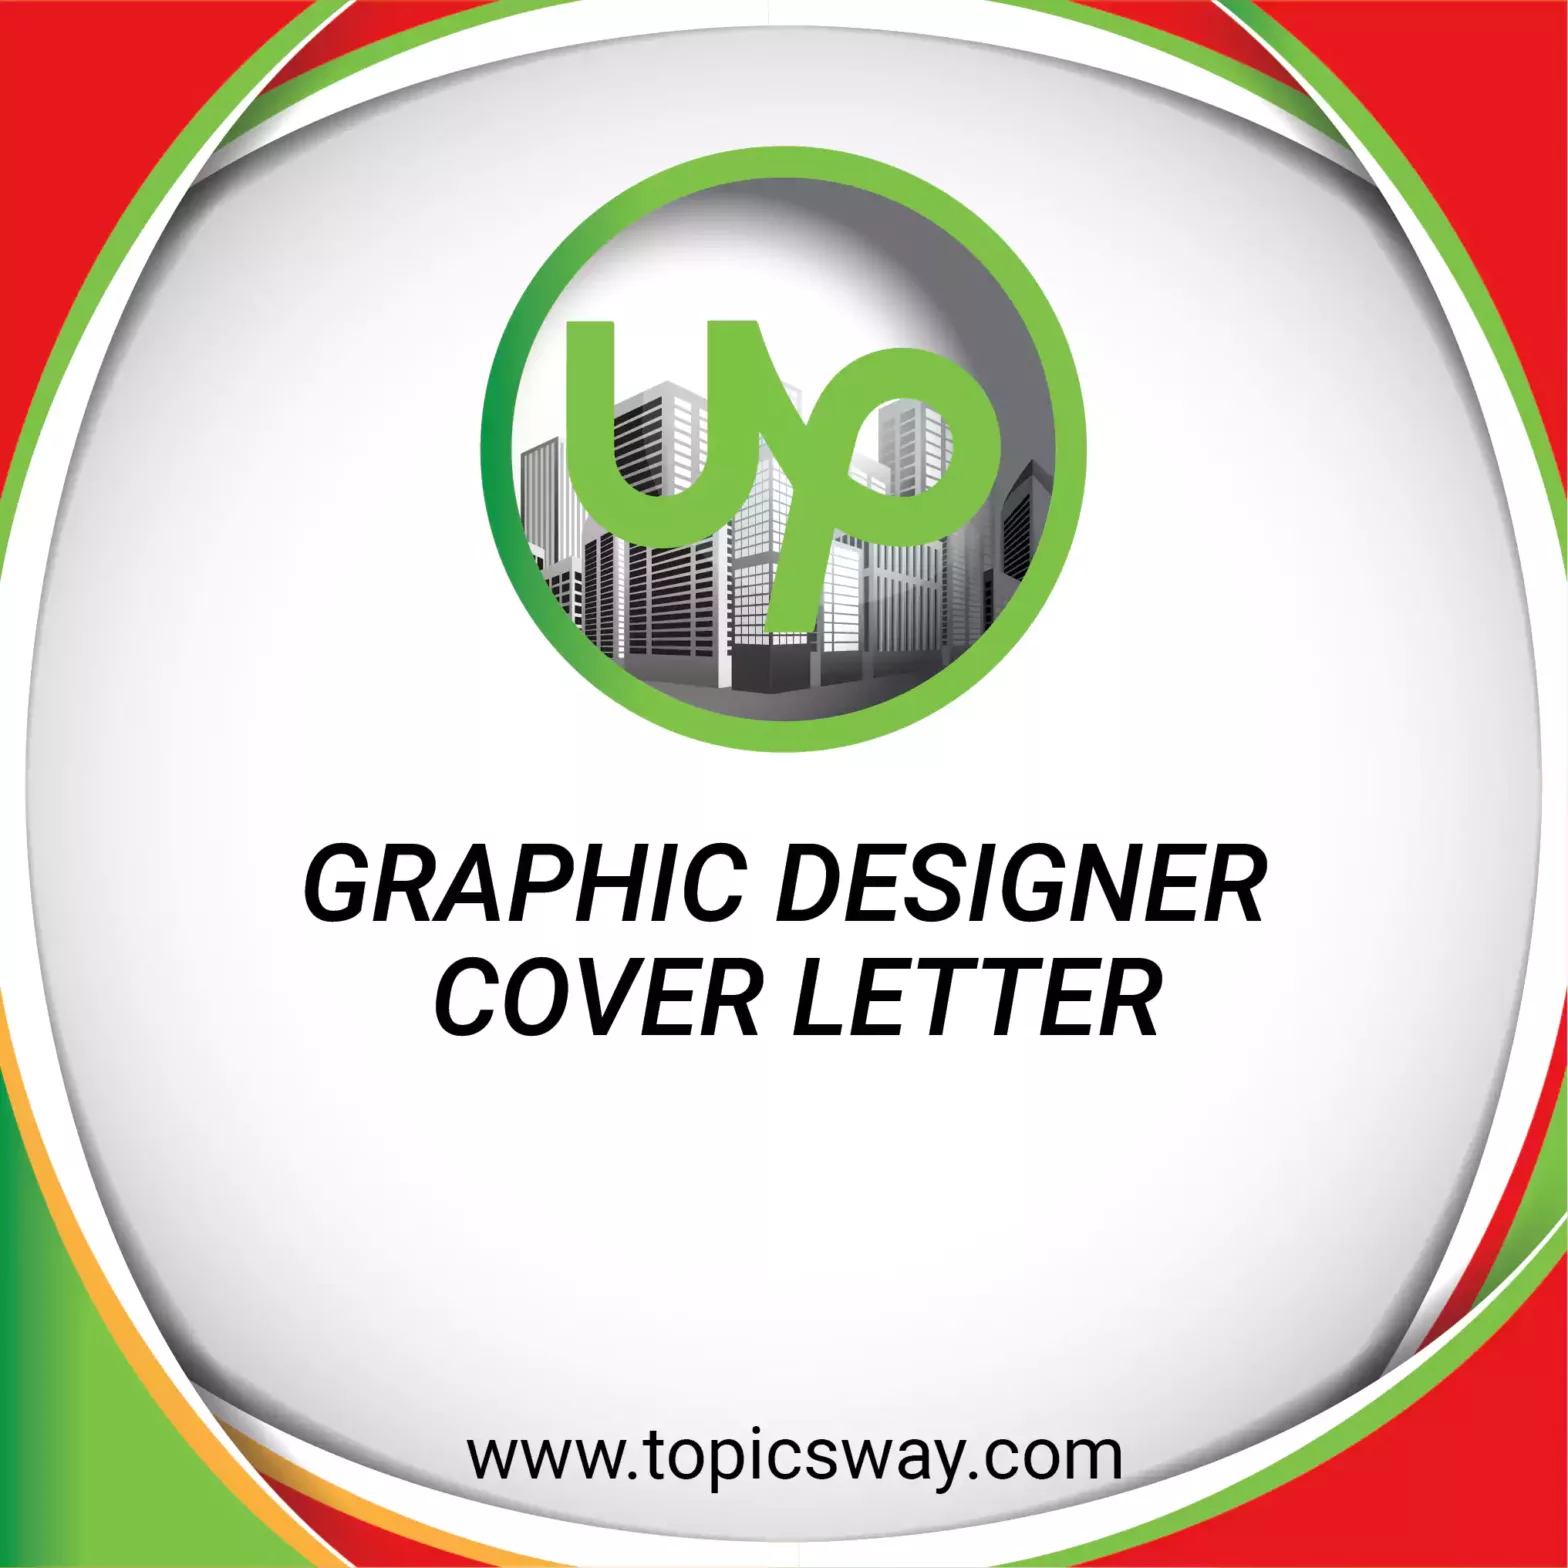 GRAPHIC DESIGNER  - COVER LETTER